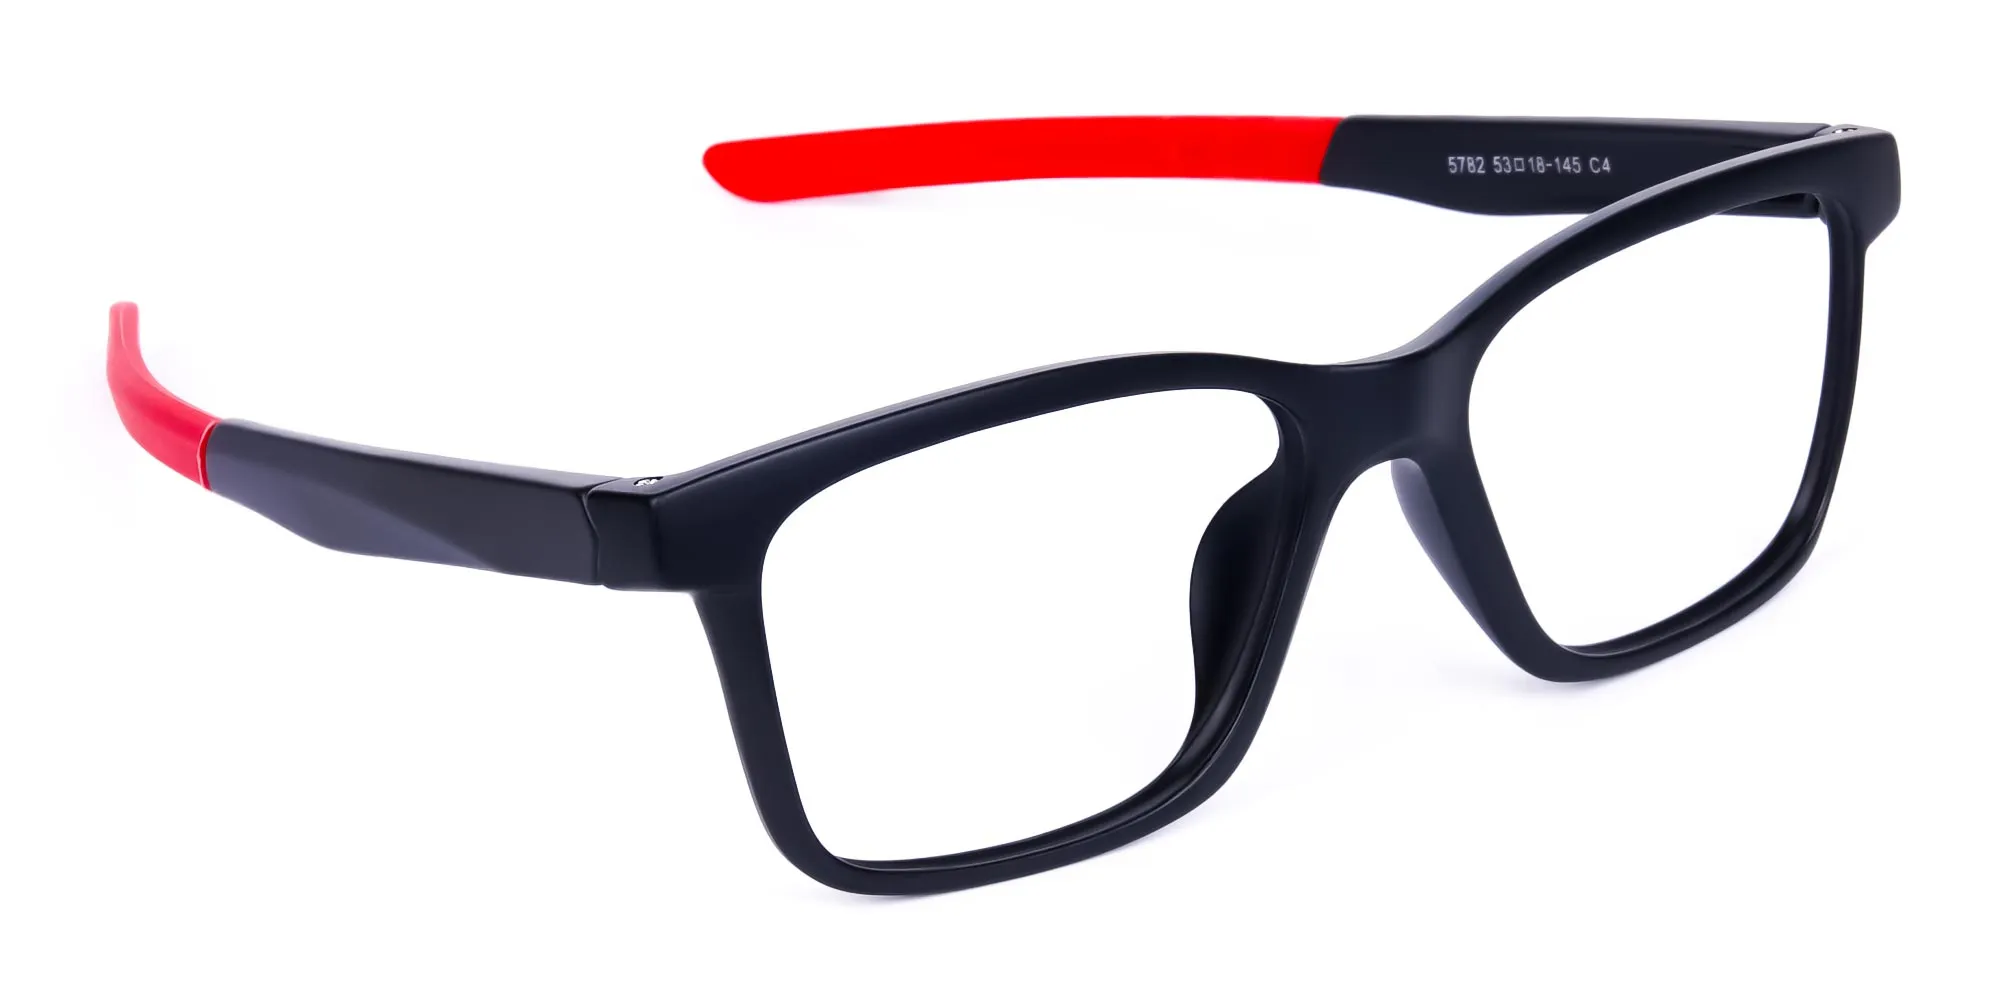 Red & Black Rectangular Rim Goggles For Biking-2